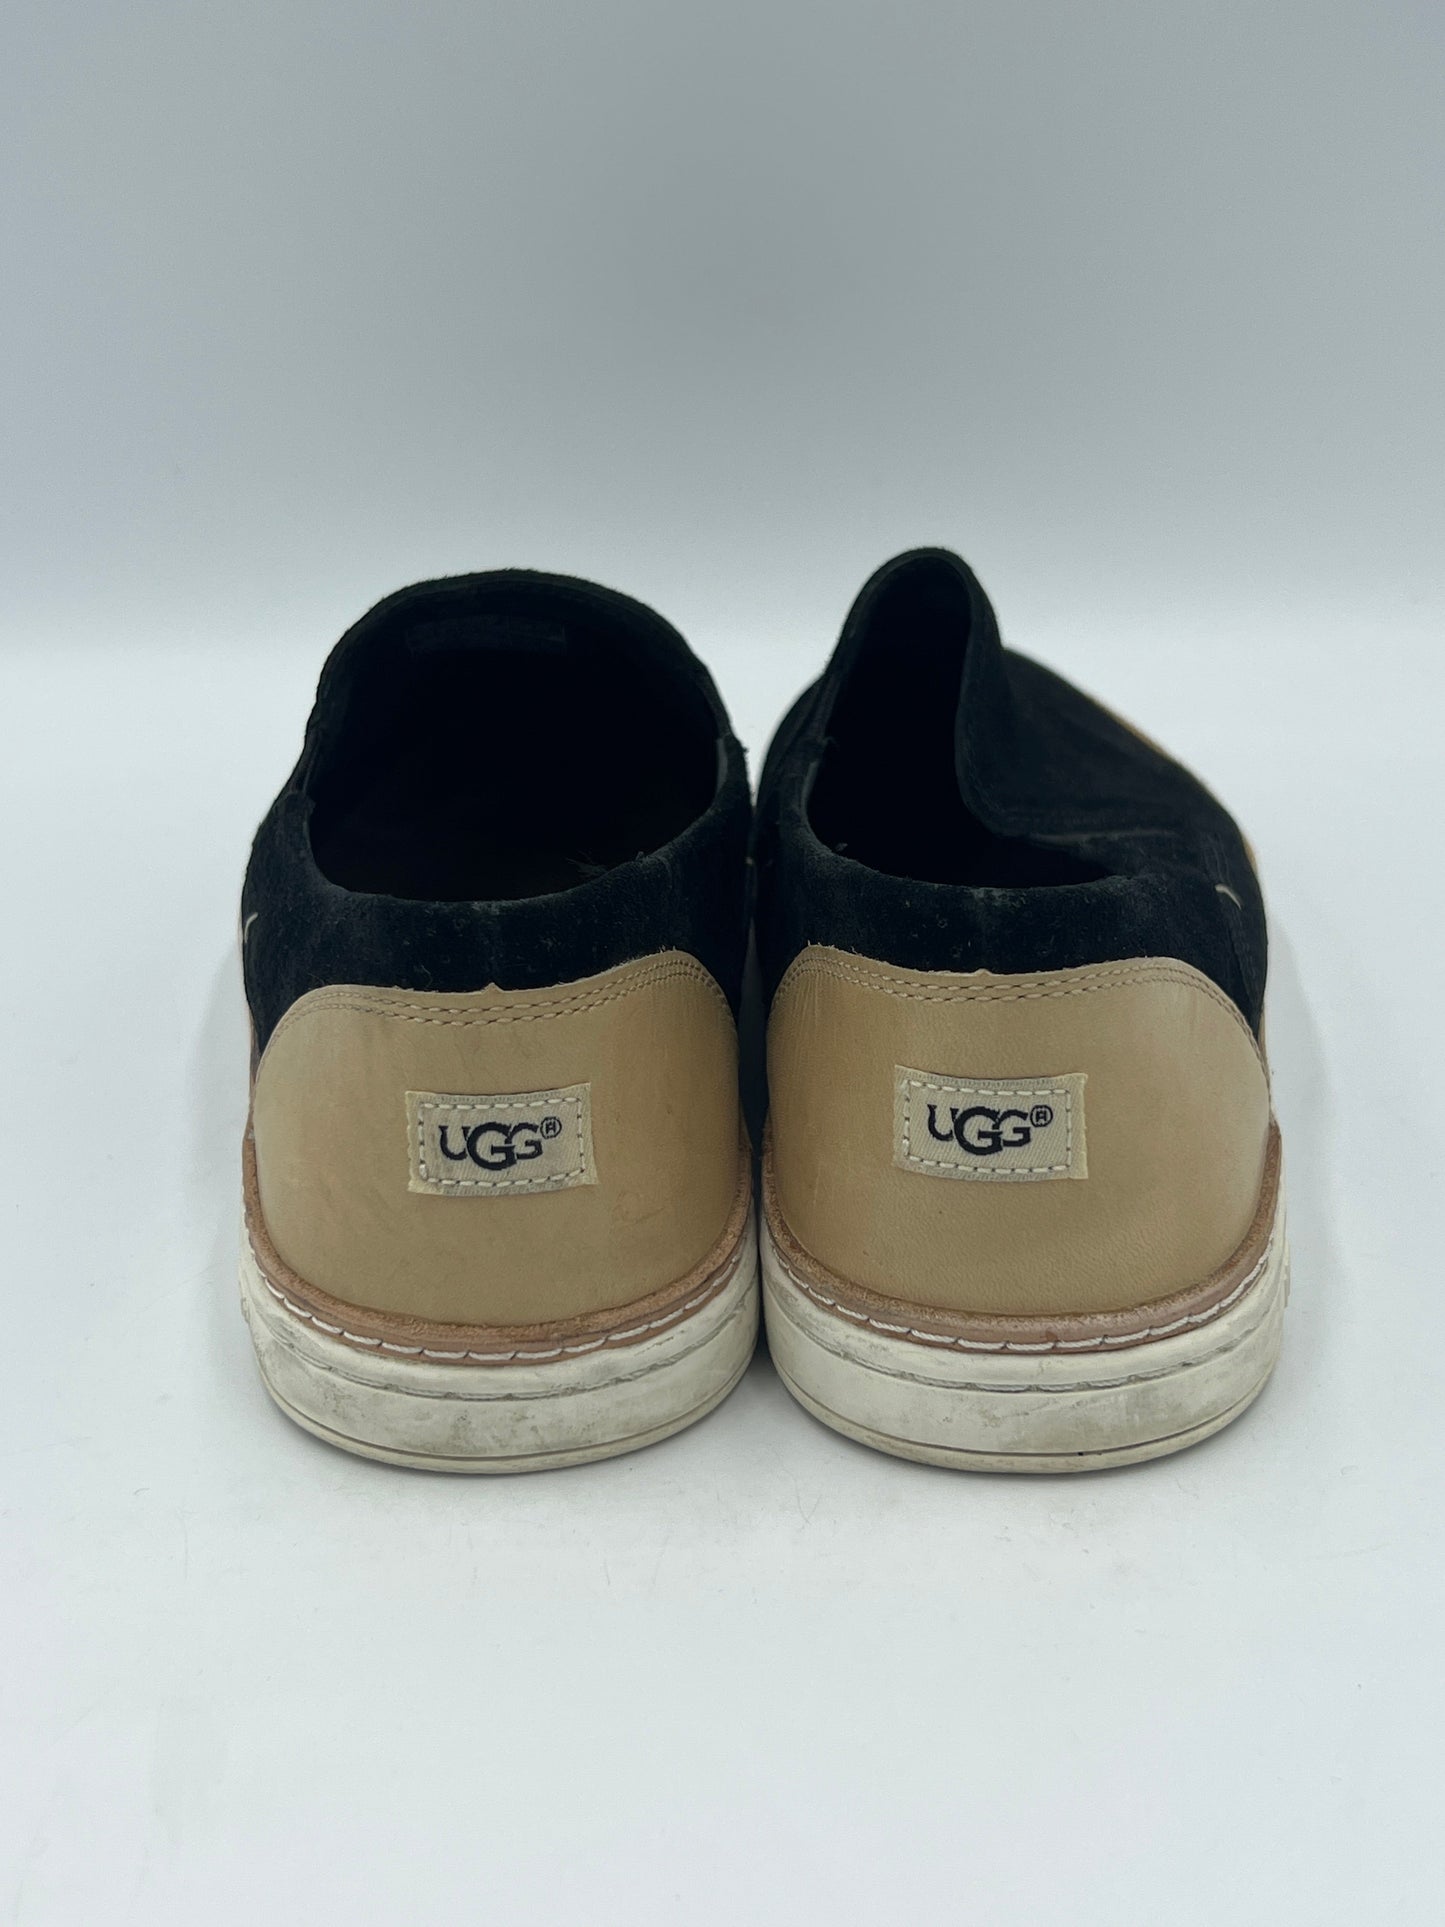 Shoes Designer By Ugg  Size: 10